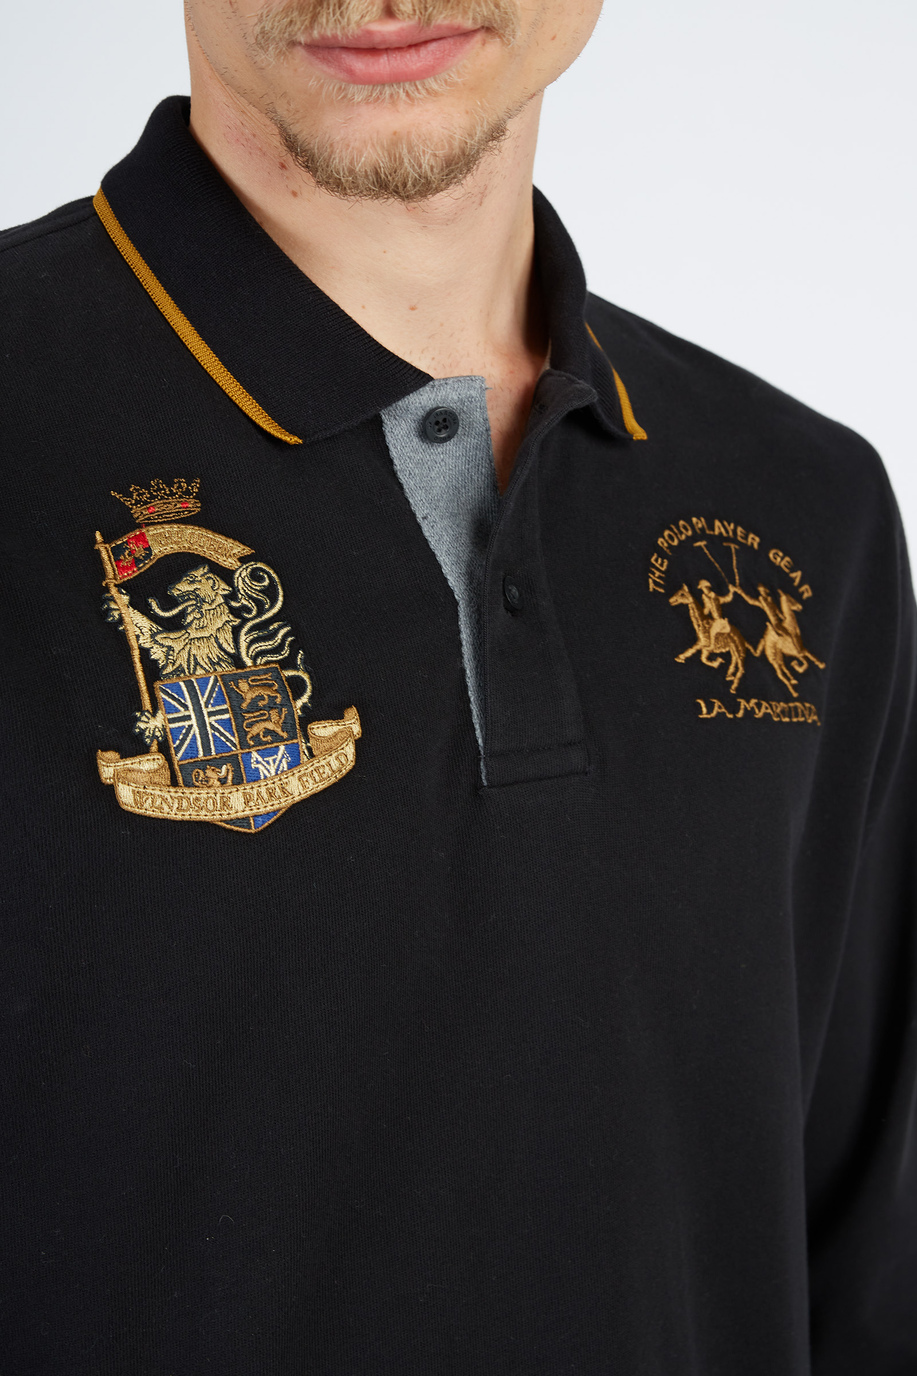 Herren-Poloshirt mit langen Ärmeln aus Jersey-Baumwolle - Best Seller | La Martina - Official Online Shop